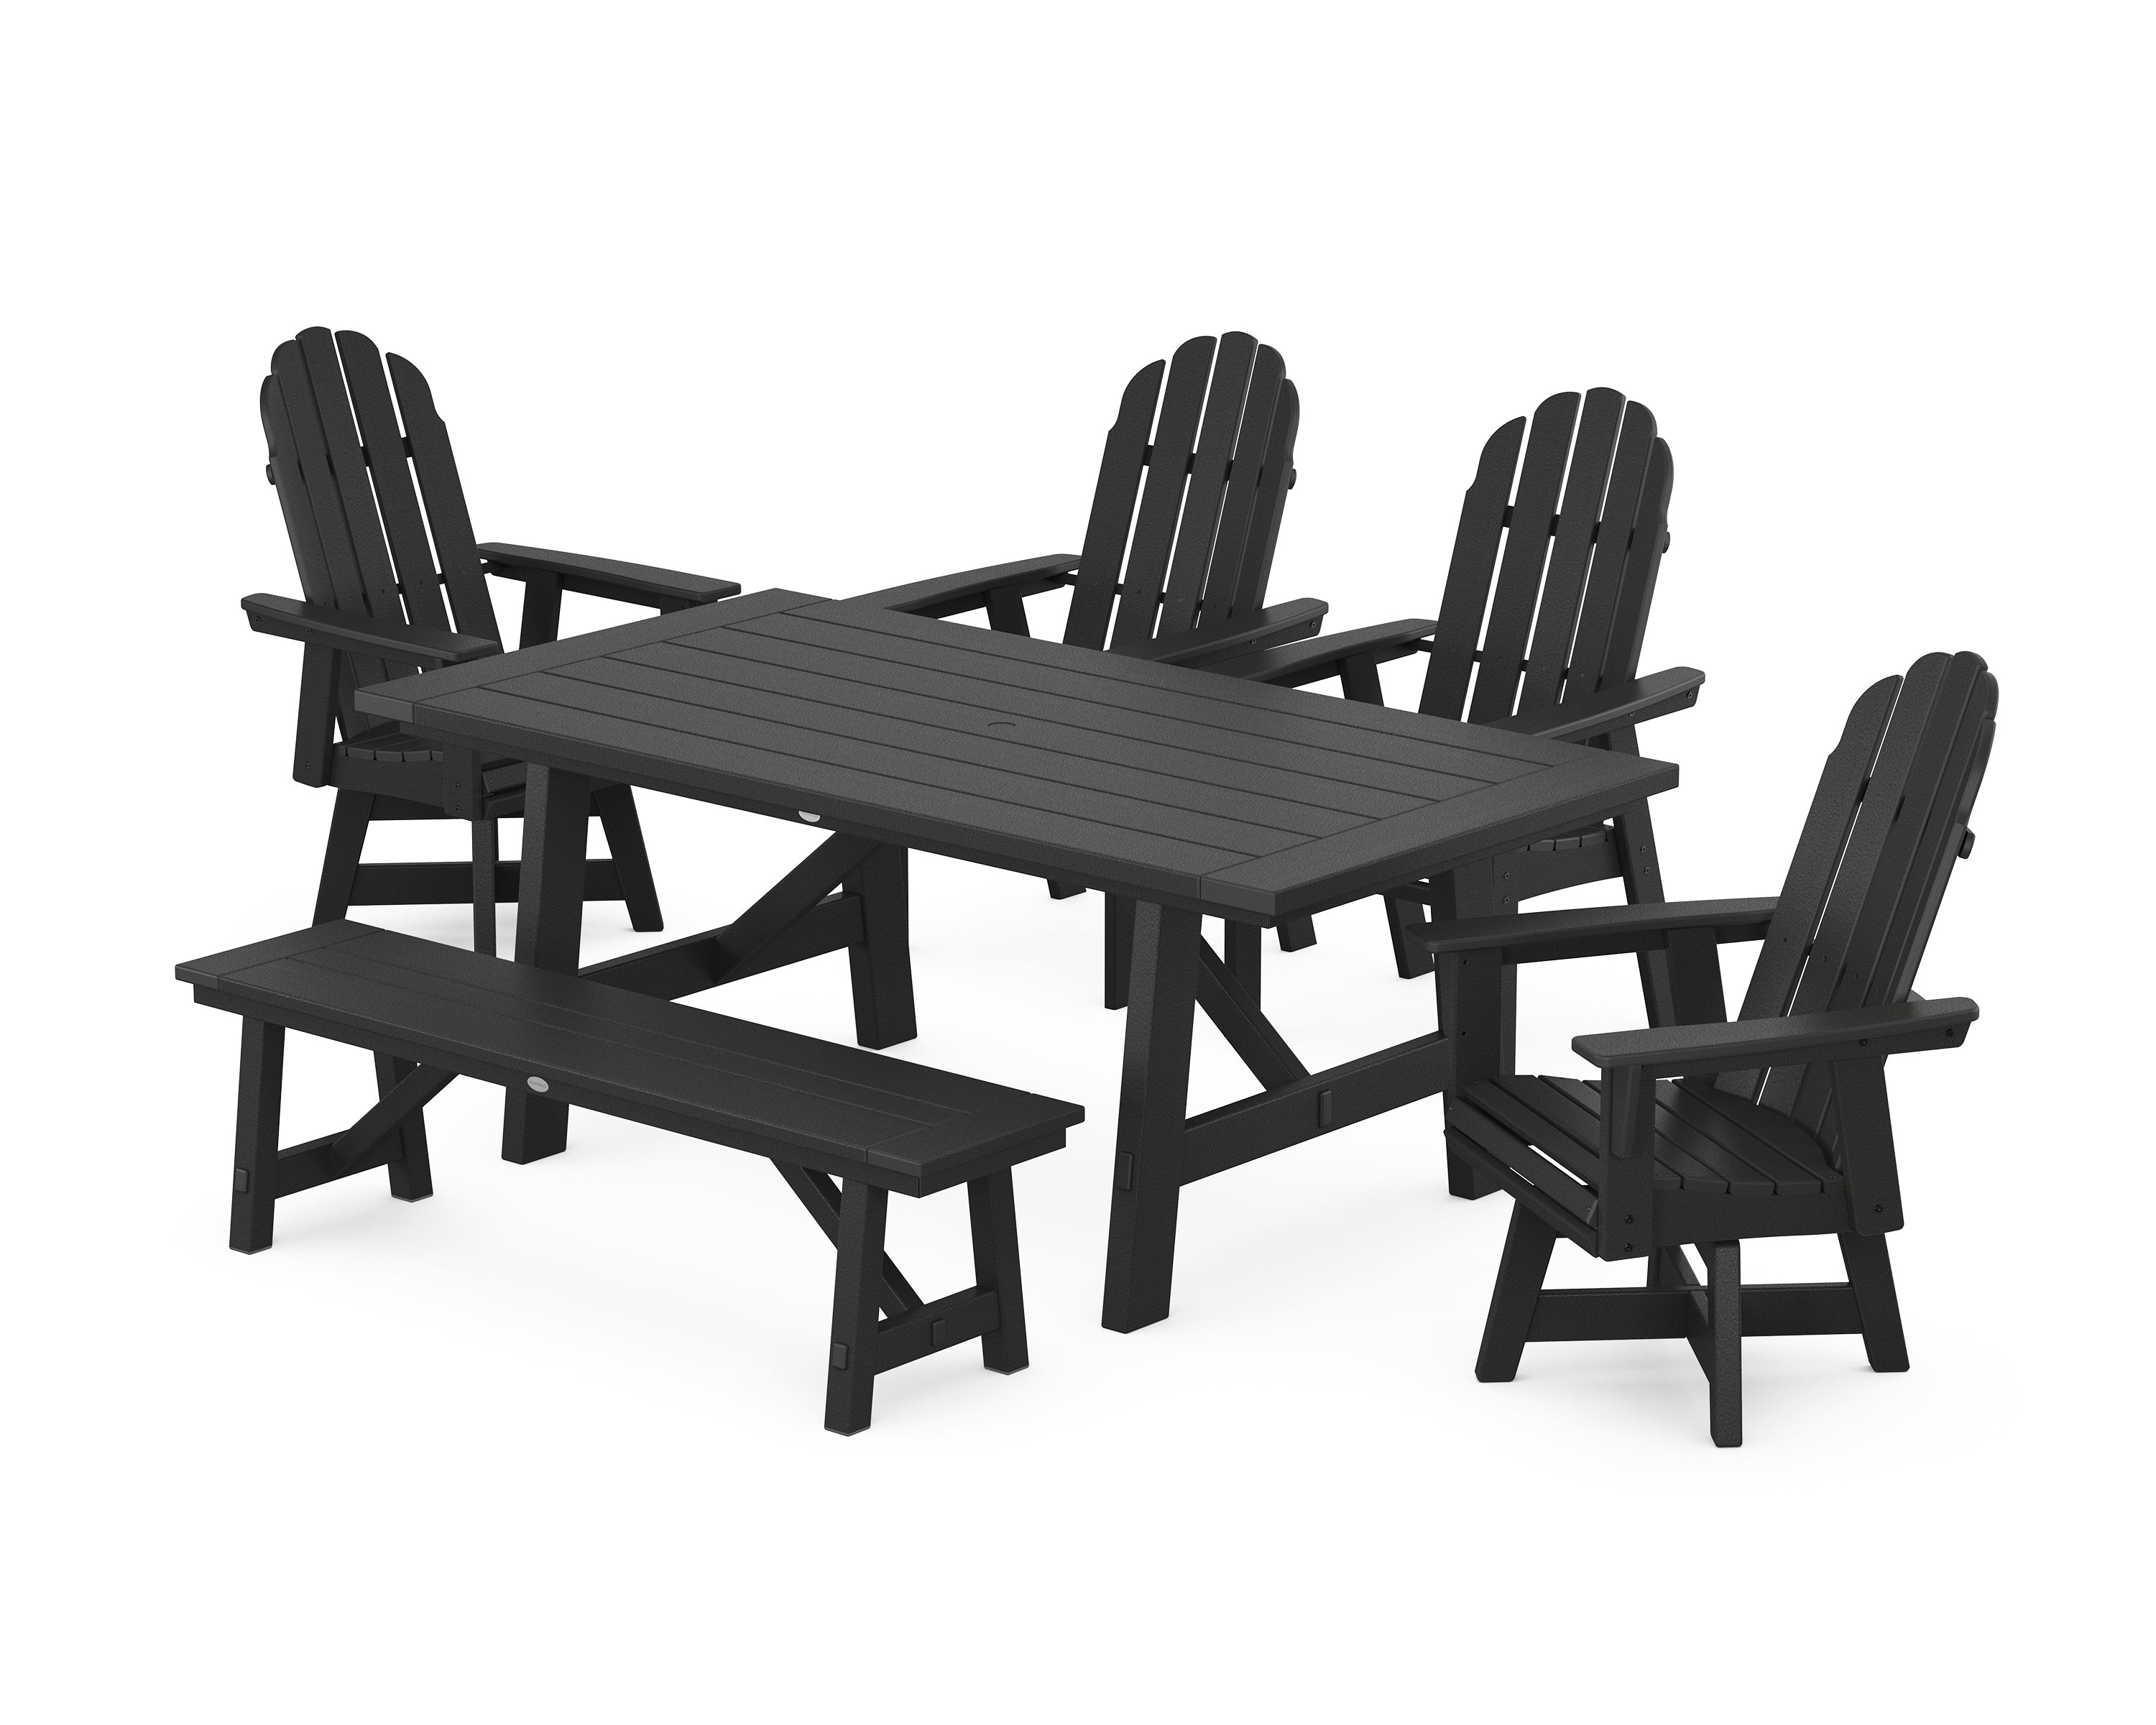 POLYWOOD® Vineyard Curveback Adirondack Swivel Chair 6-Piece Rustic Farmhouse Dining Set With Bench in Black